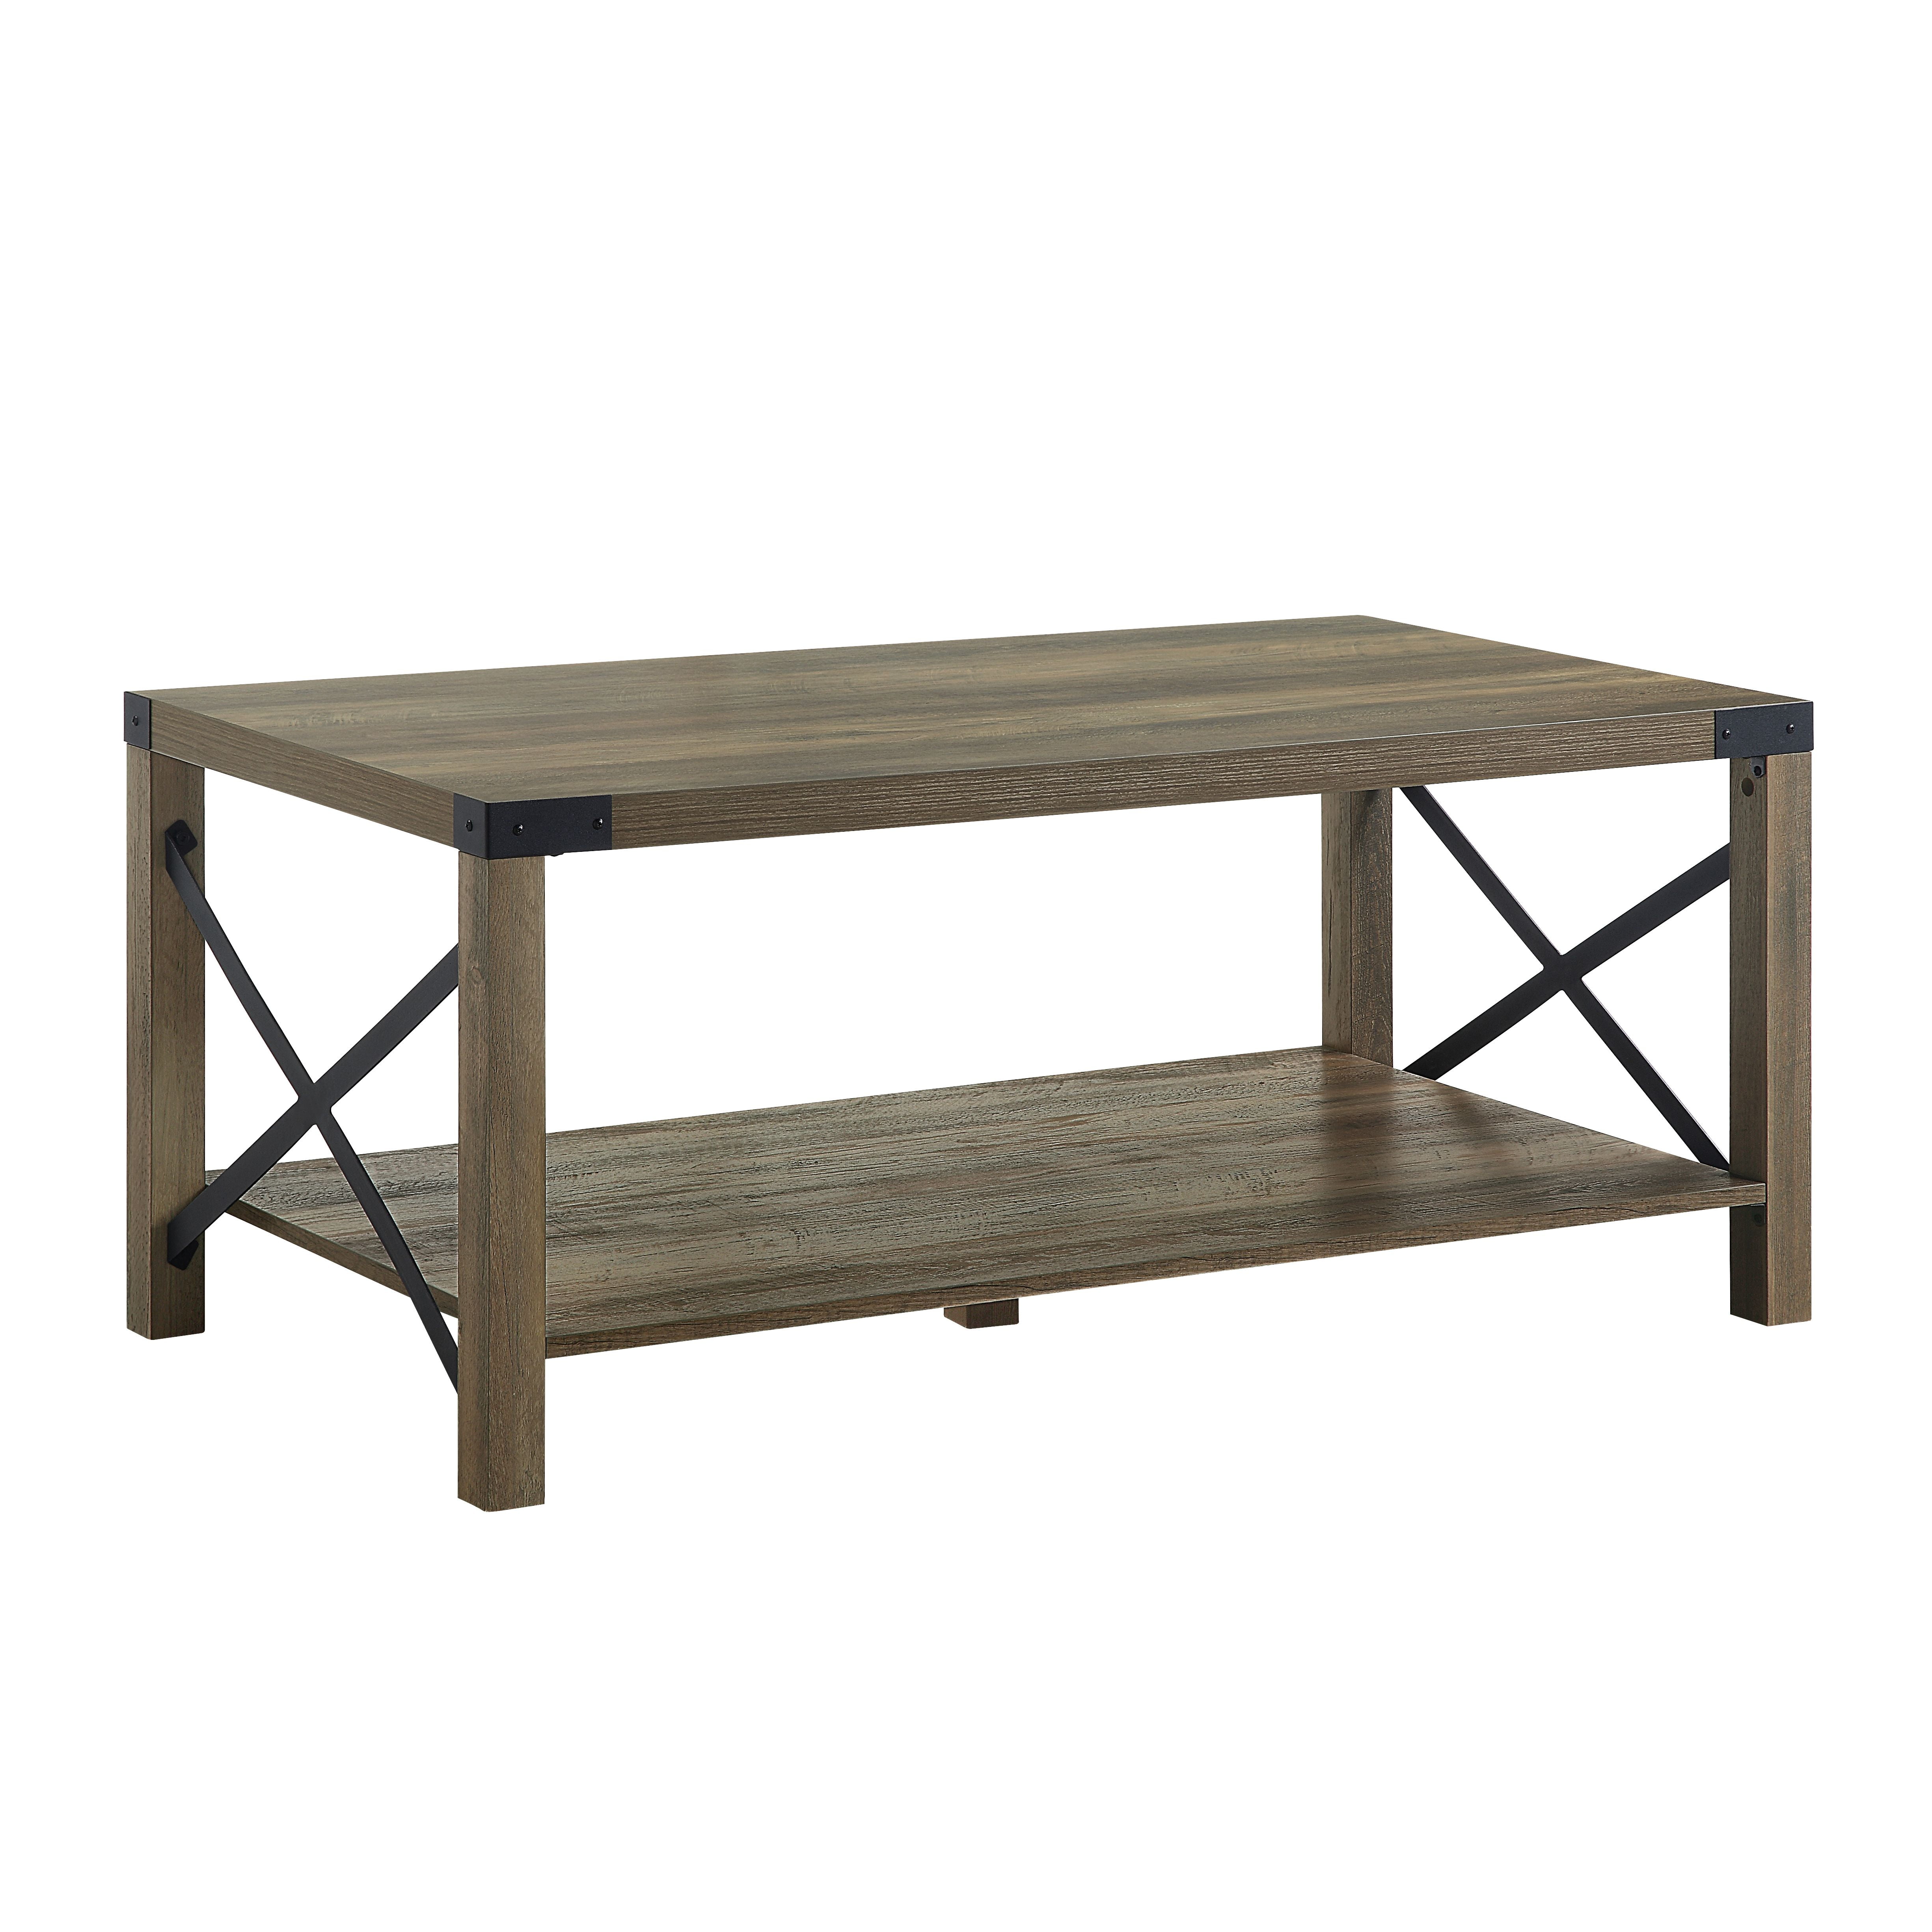 Picture of Acme Furniture LV01001 47 x 24 x 19 in. Abiram Coffee Table, Rustic Oak